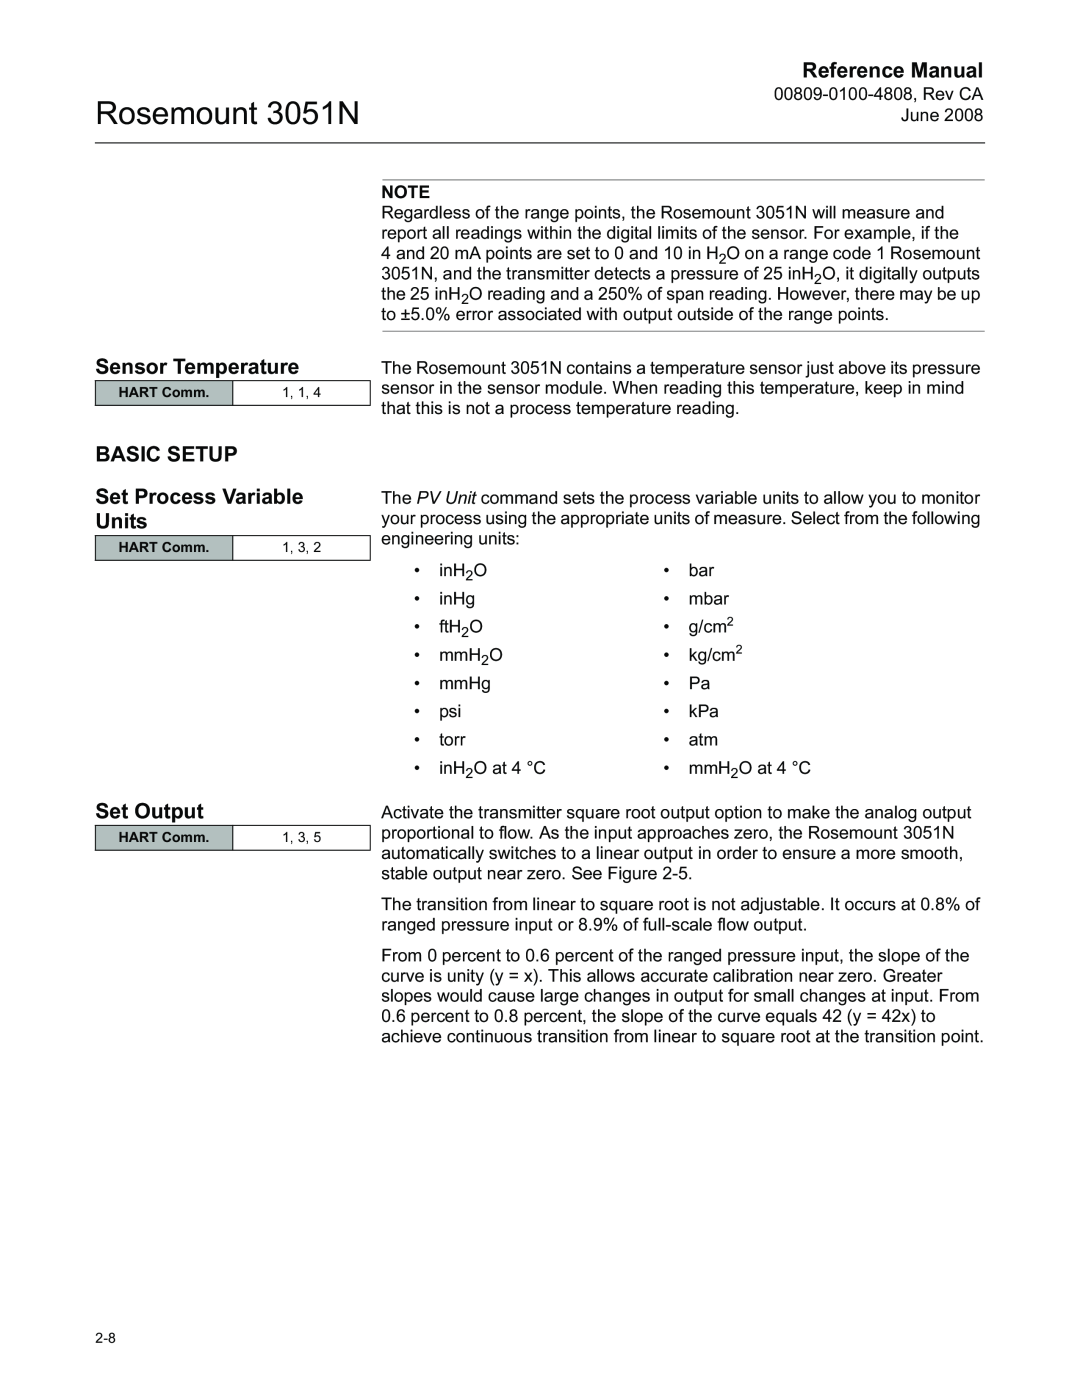 Emerson manual Sensor Temperature, BASIC SETUP Set Process Variable Units, Set Output, Rosemount 3051N, Reference Manual 